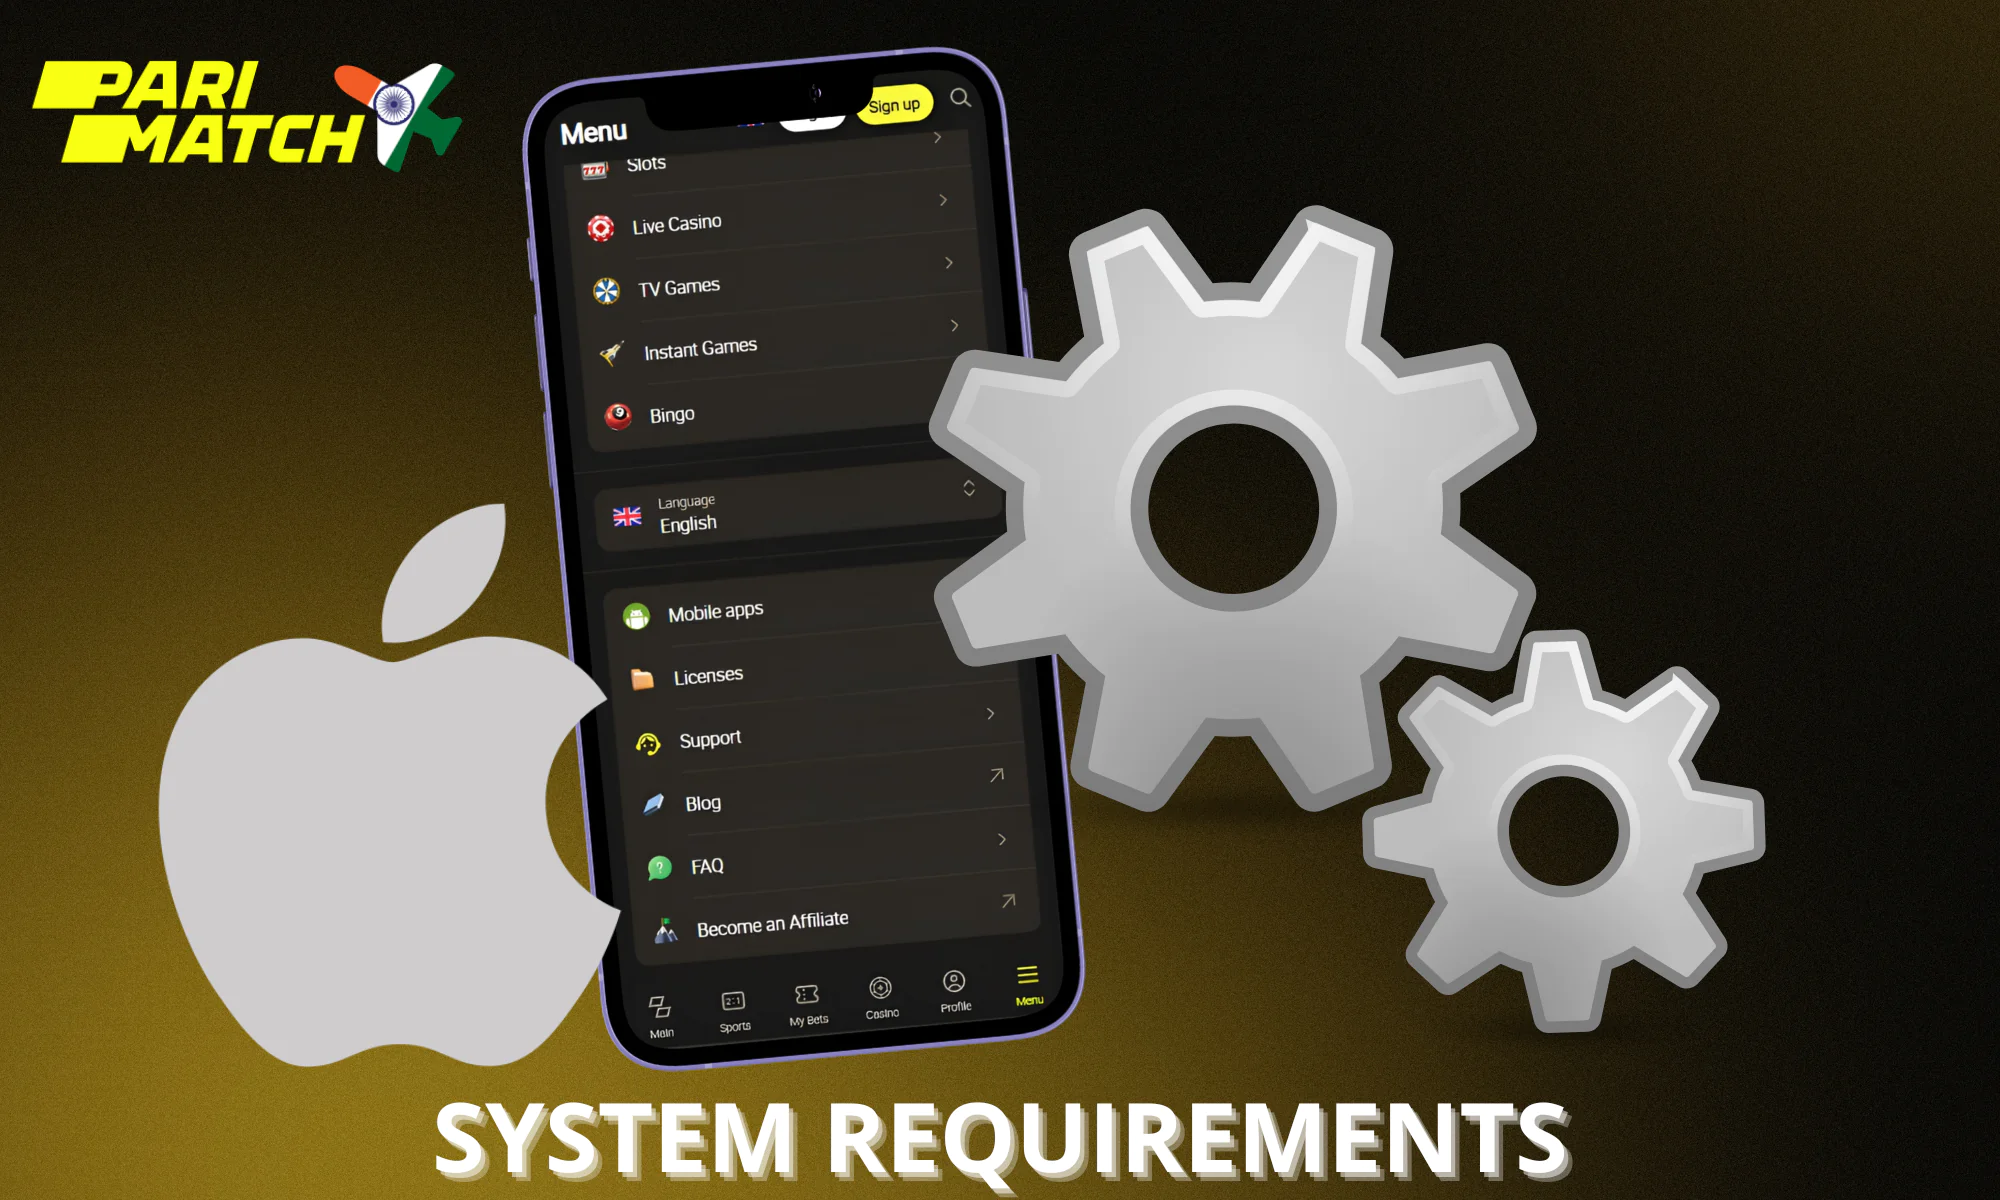 The Parimatch Aviator app for iOS has minimum system requirements